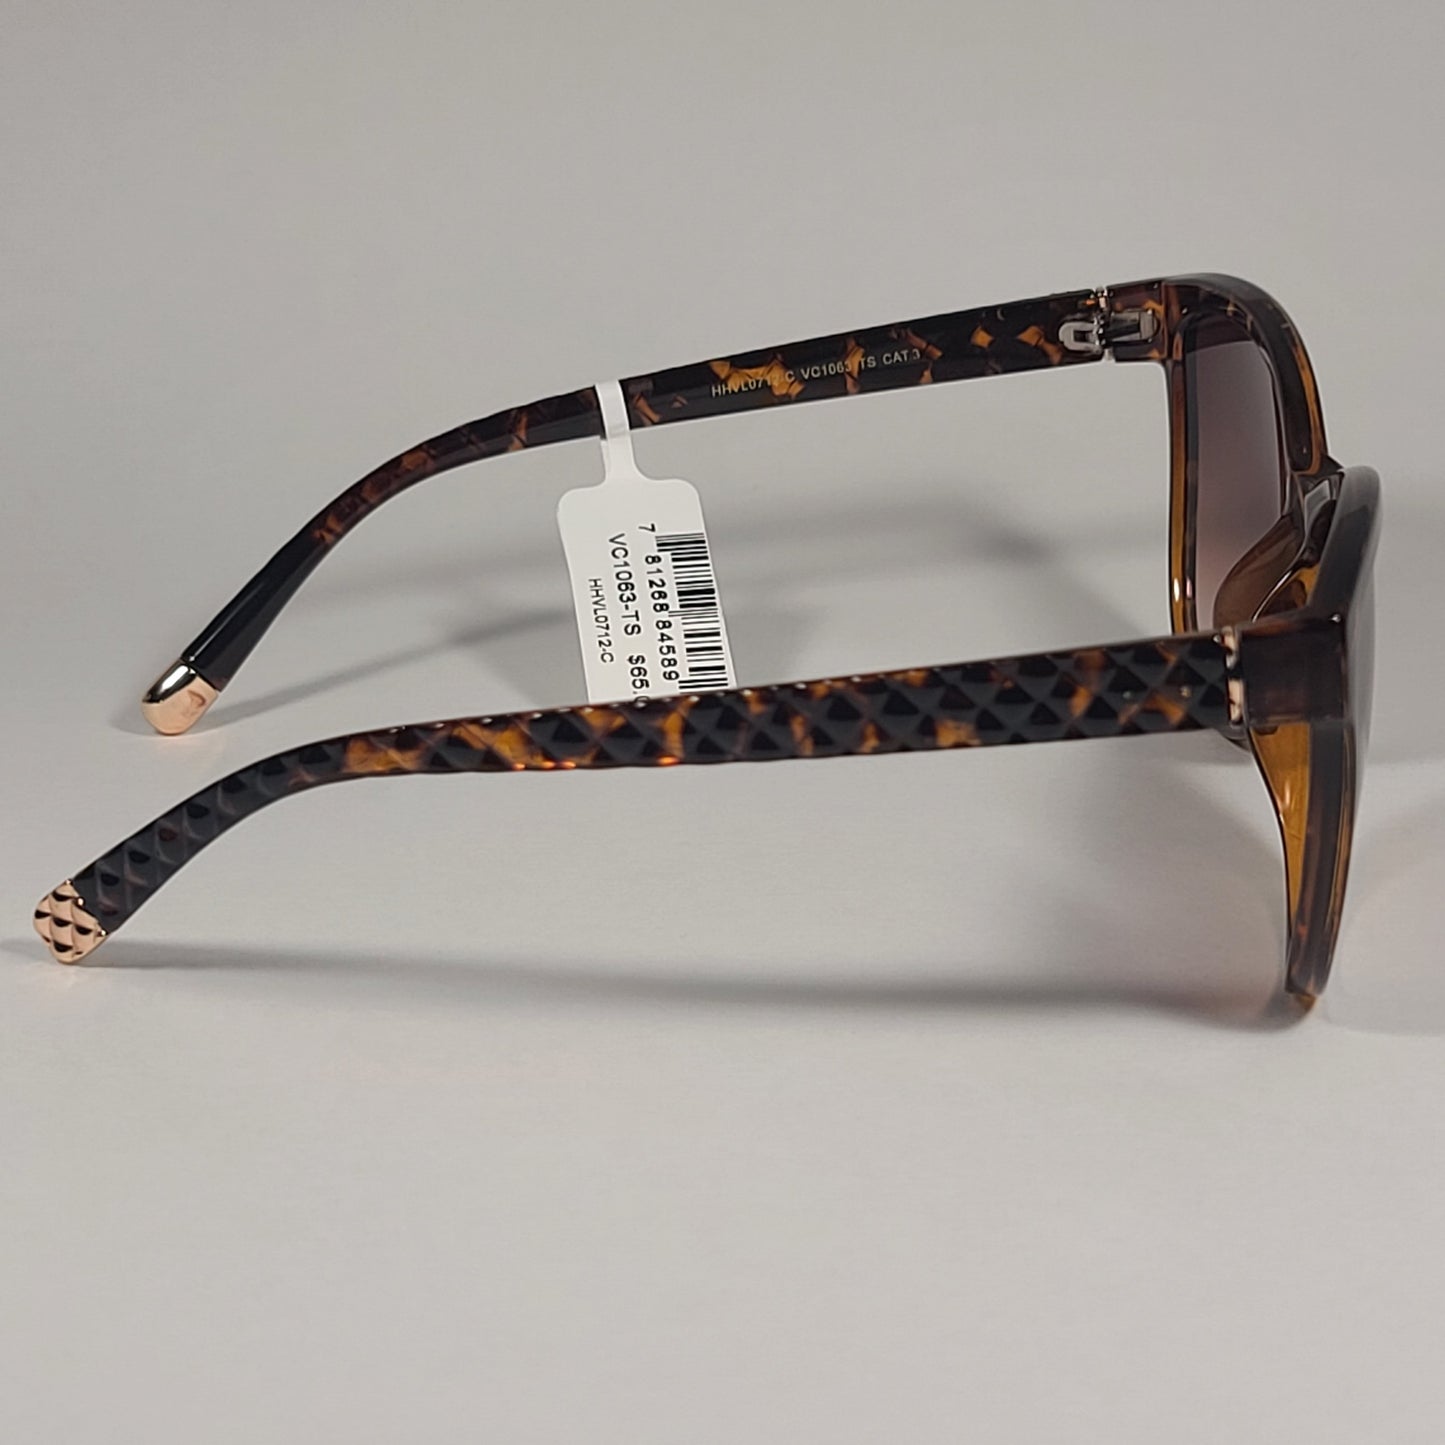 Vince Camuto VC1063 TS Cat Eye Sunglasses Brown Tortoise Frame Brown Gradient Lens - Sunglasses